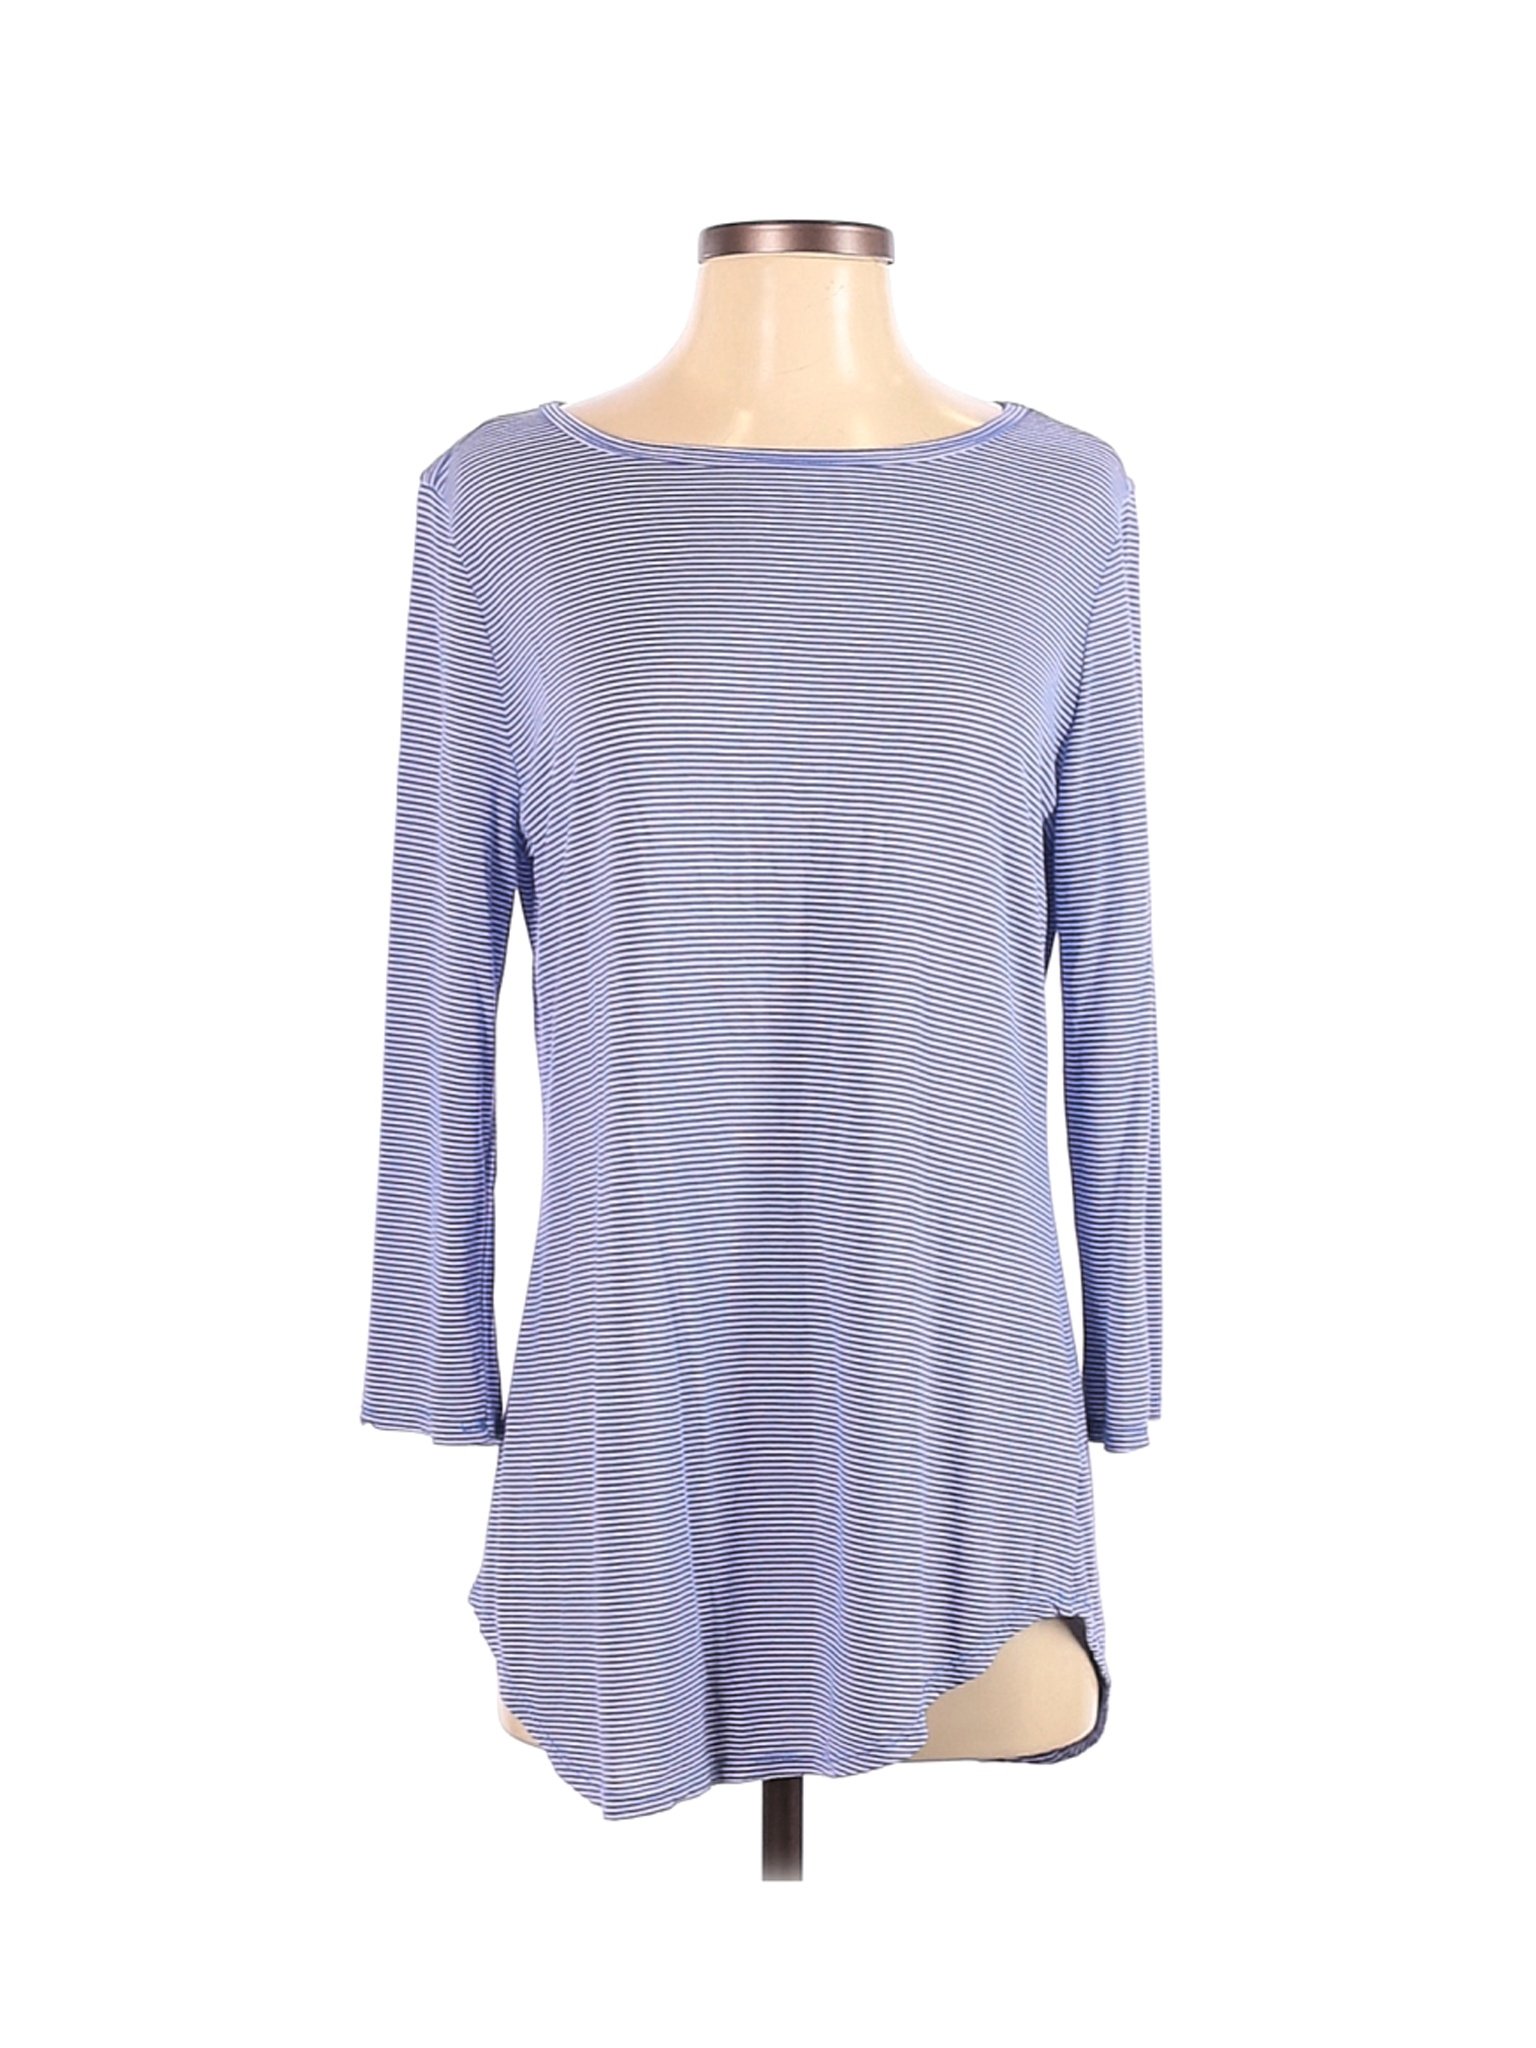 Prairie Cotton Women Purple Short Sleeve Top M | eBay